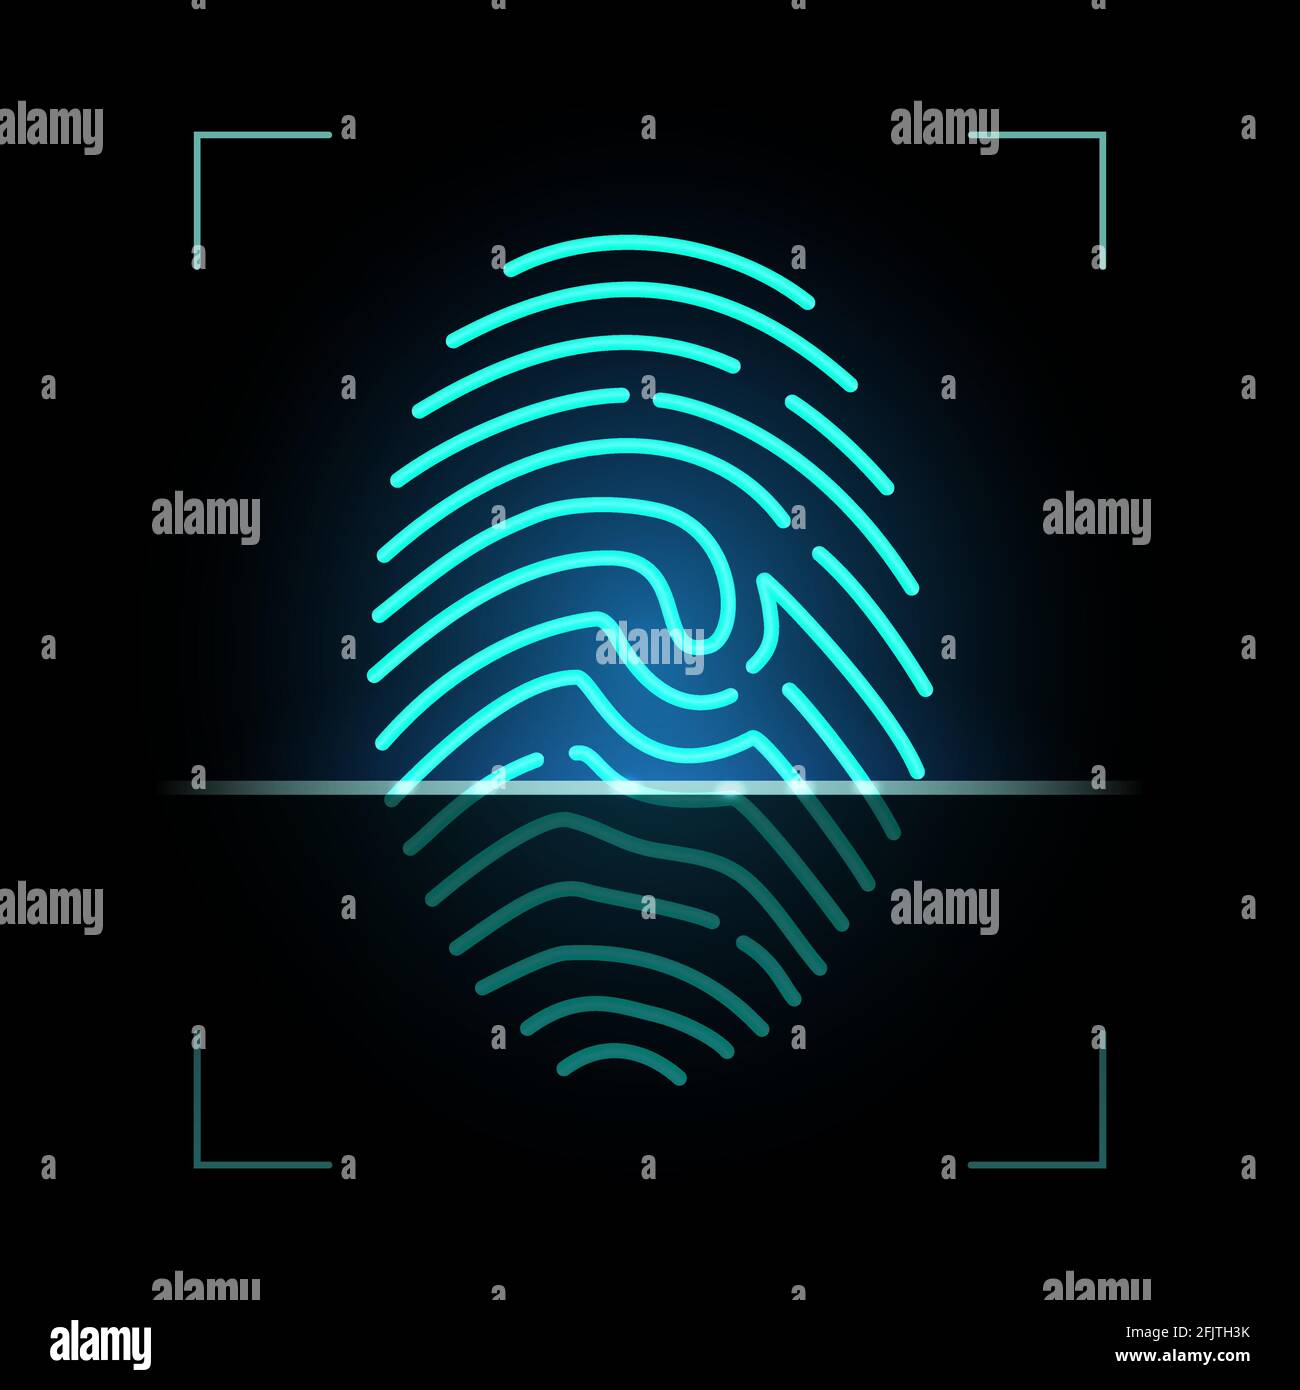 digital fingerprint capture